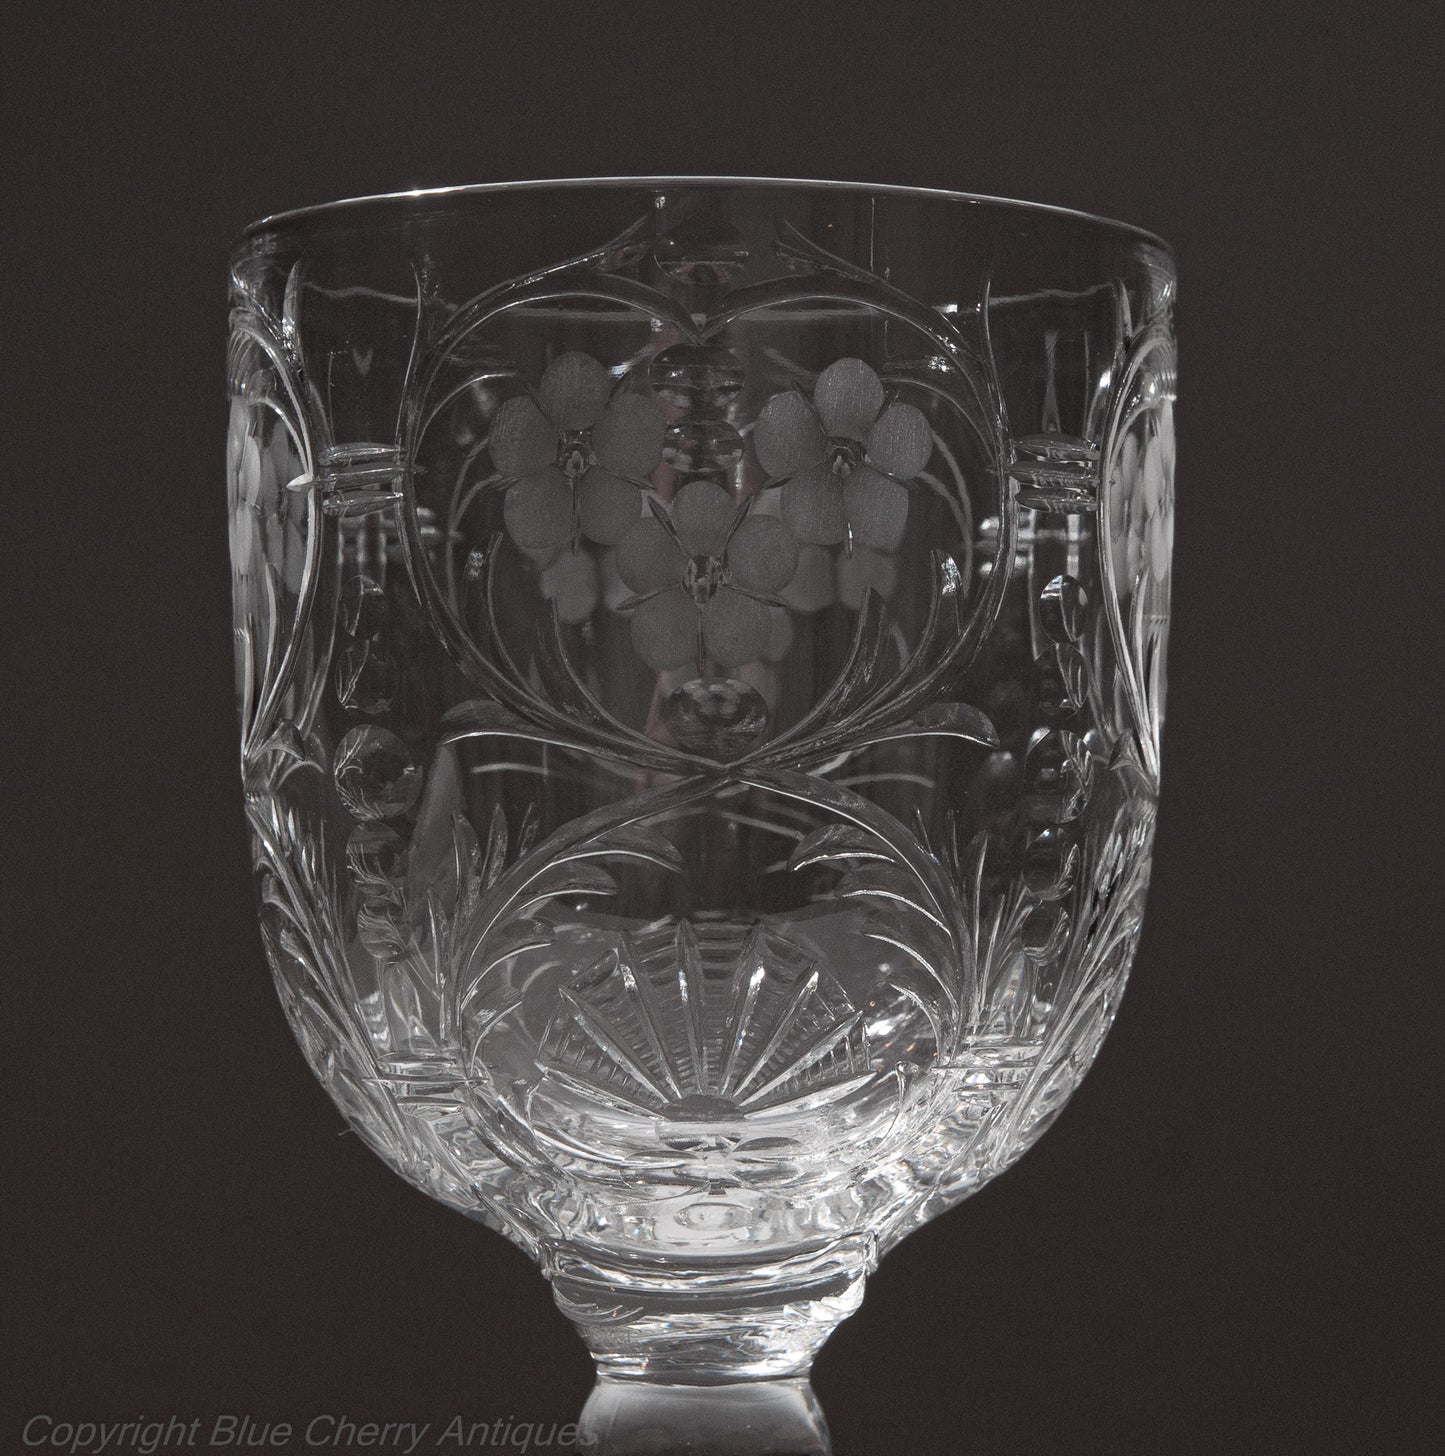 Antique Stevens & Williams Rock Crystal Intaglio Cut Glass Wine Goblet (Code 1951)